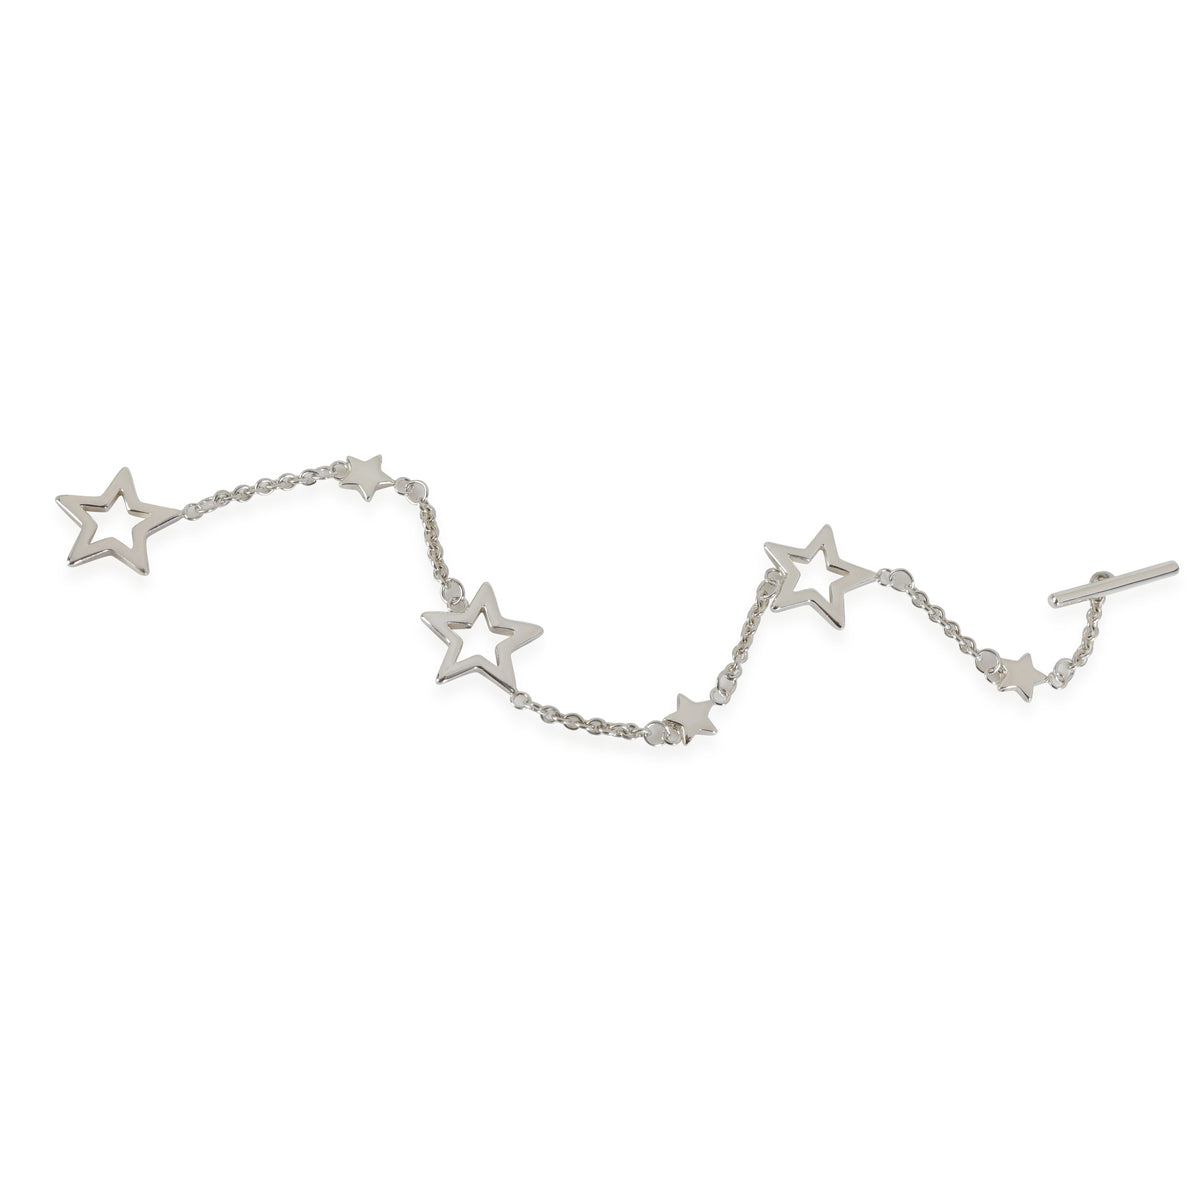 Tiffany & Co. Star Bracelet in  Sterling Silver